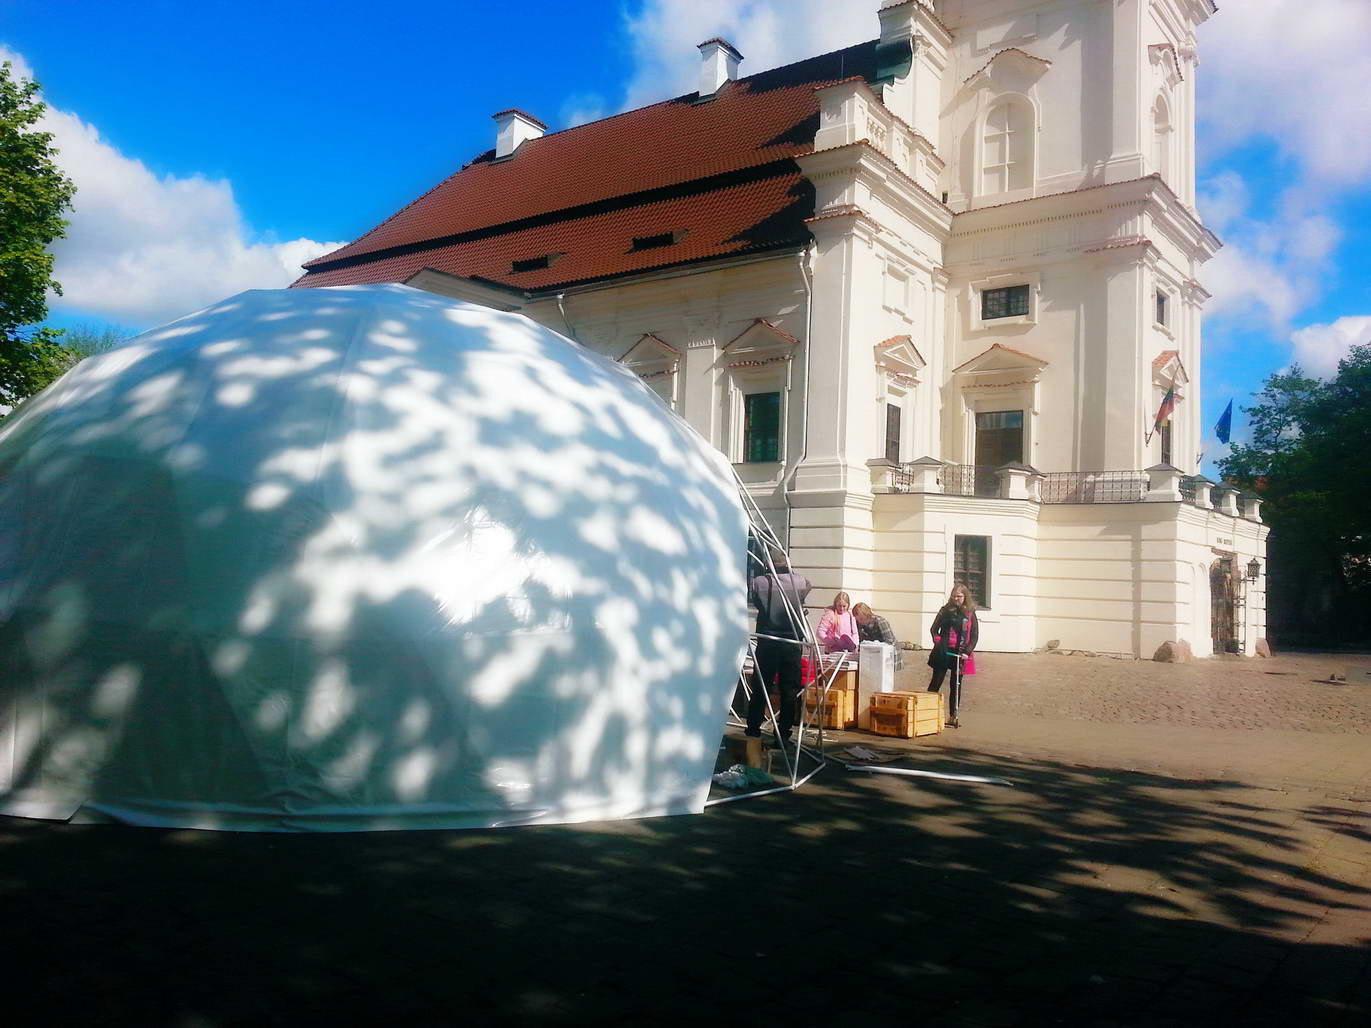 Portable Dome Ø8m for Design Week 2014 Kaunas, Lithuania